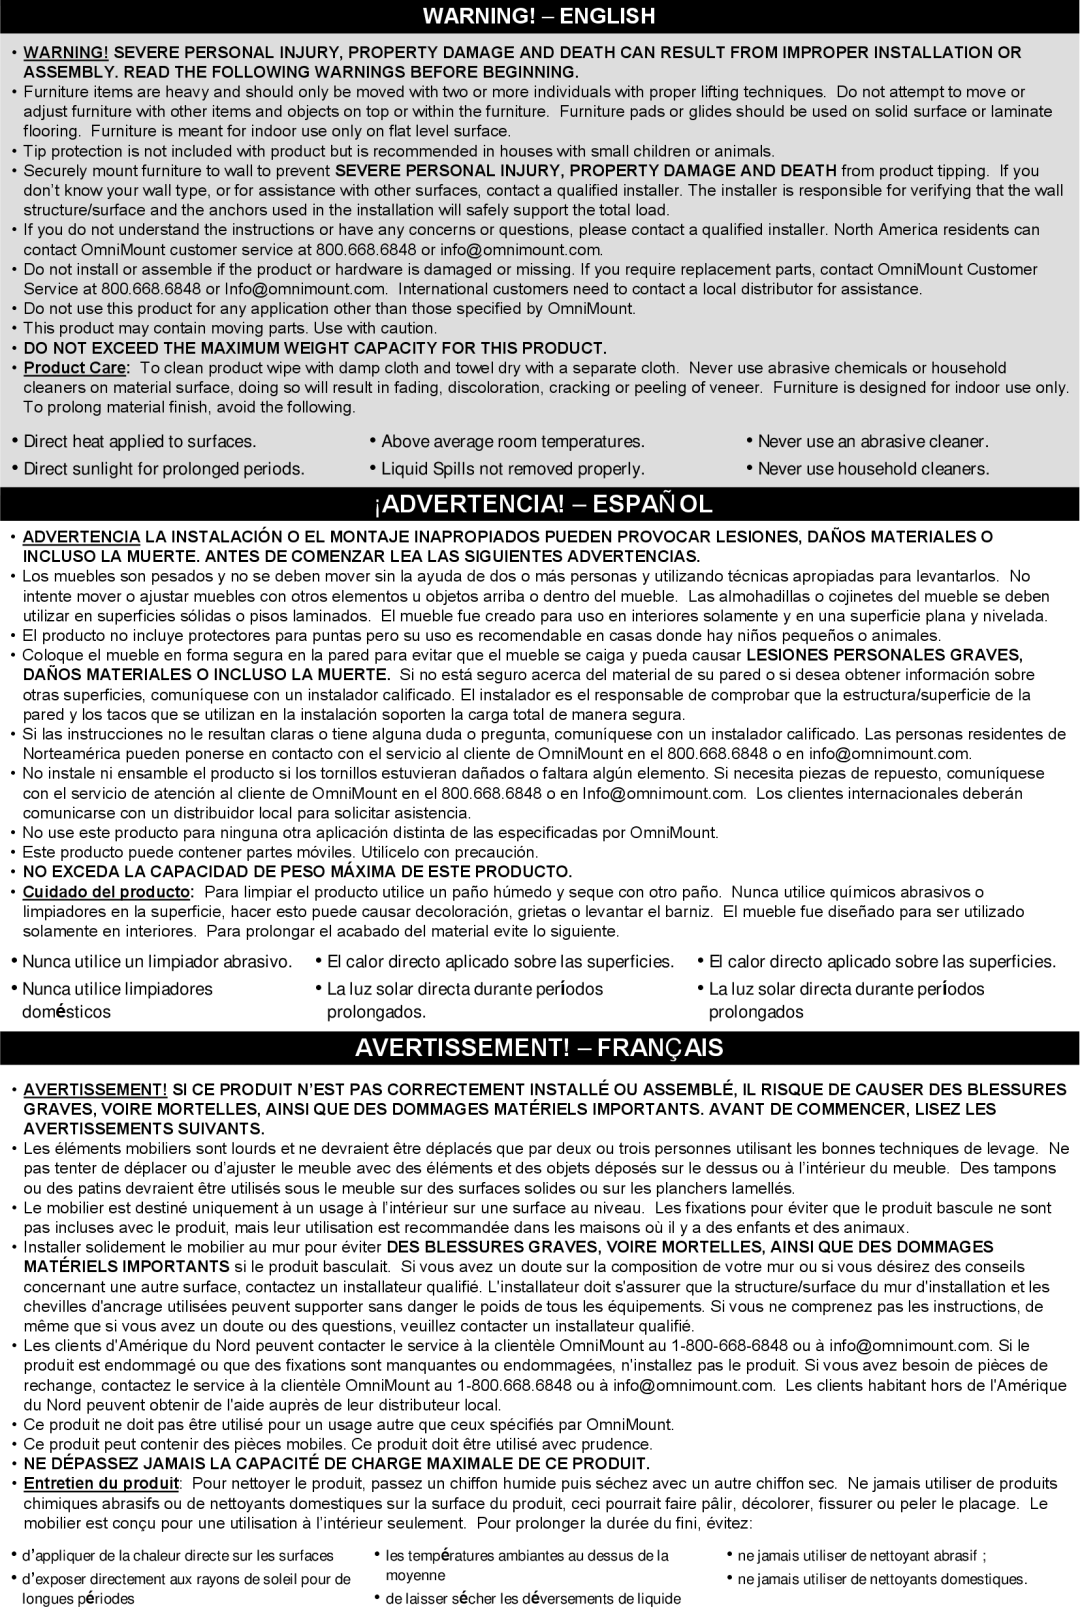 Omnimount ECHO50, 10375 manual ¡Advertencia! - Español, Avertissement! - Français, Warning! - English 